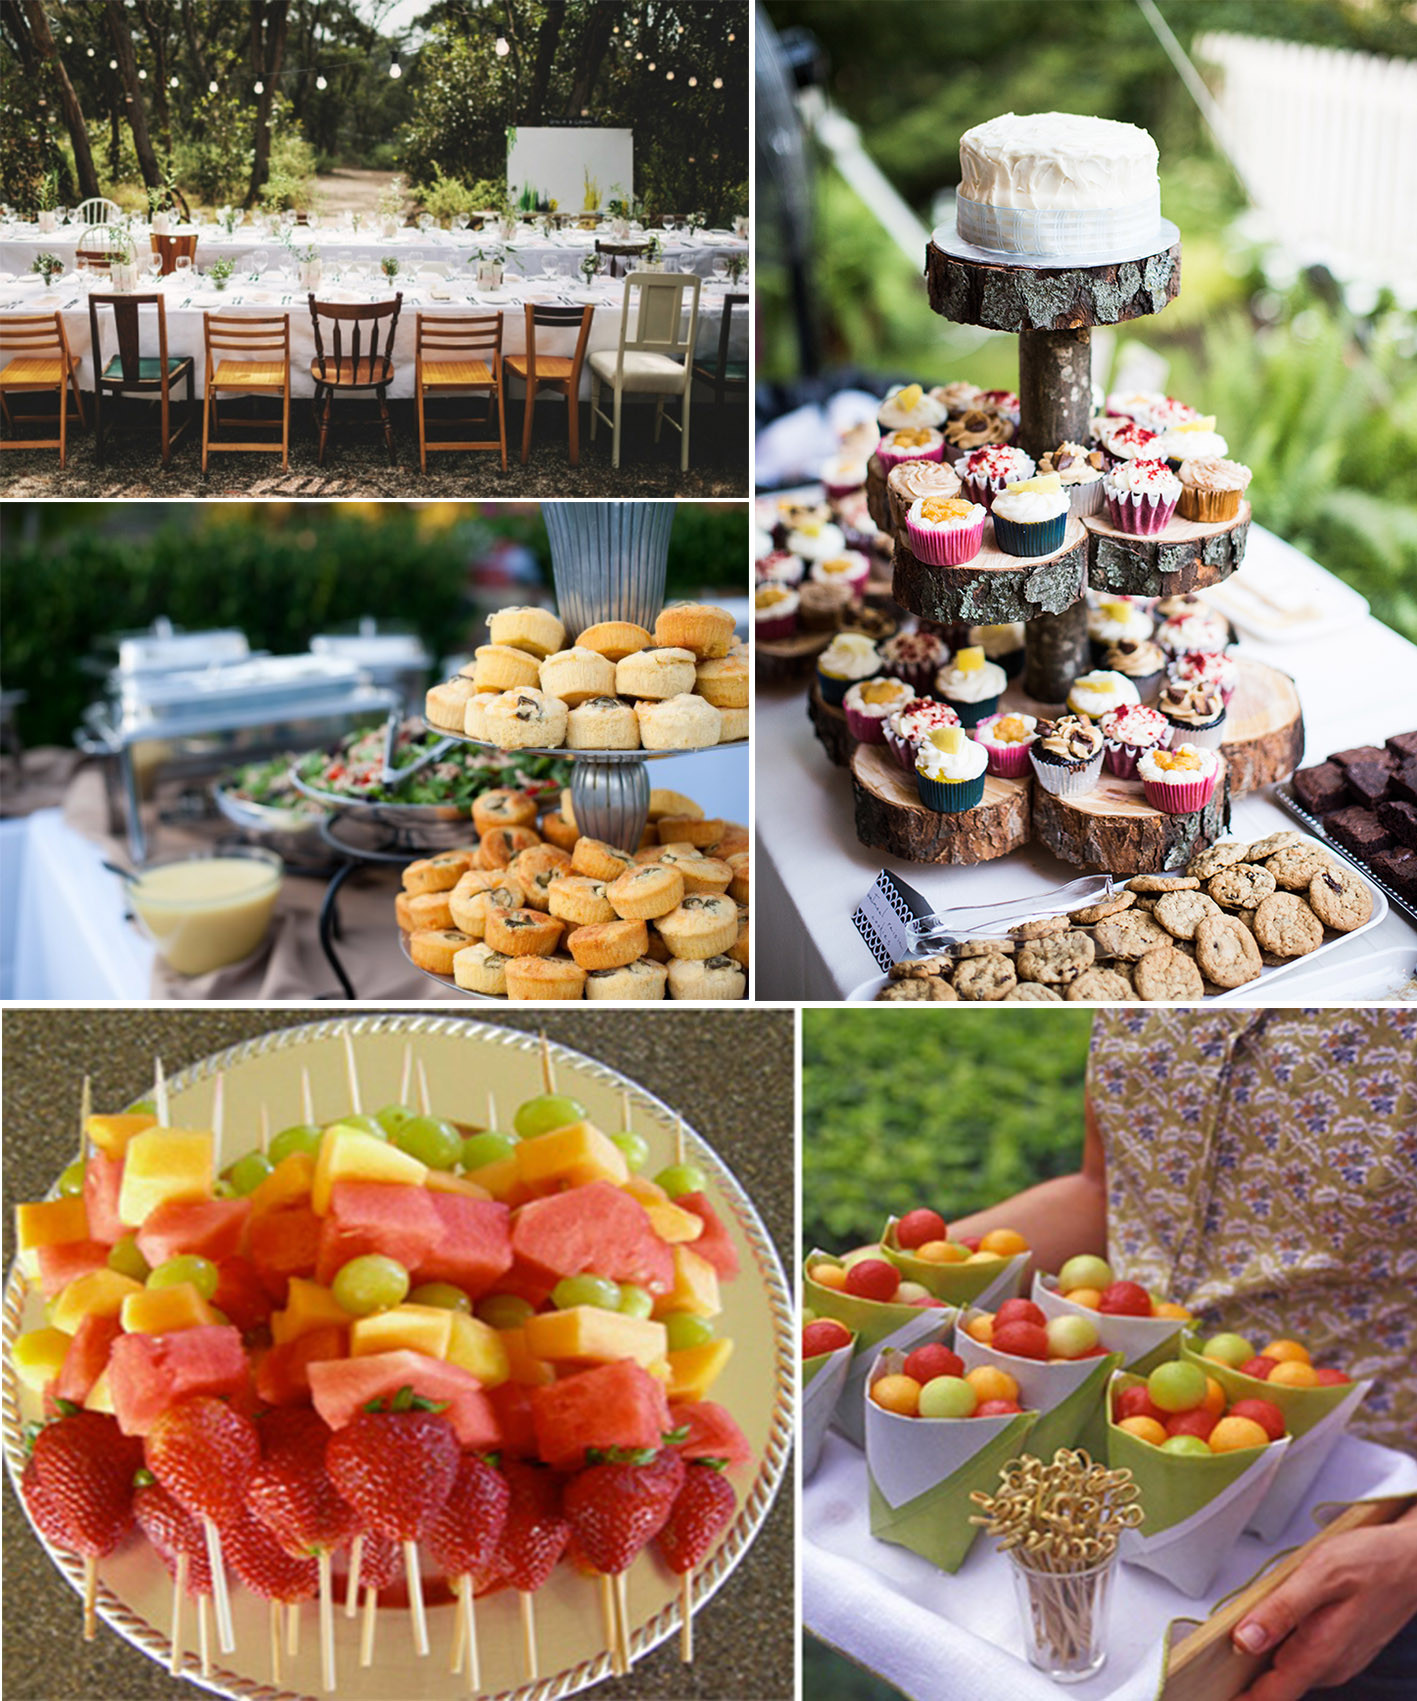 Party Food Ideas
 How to play a backyard themed wedding – lianggeyuan123